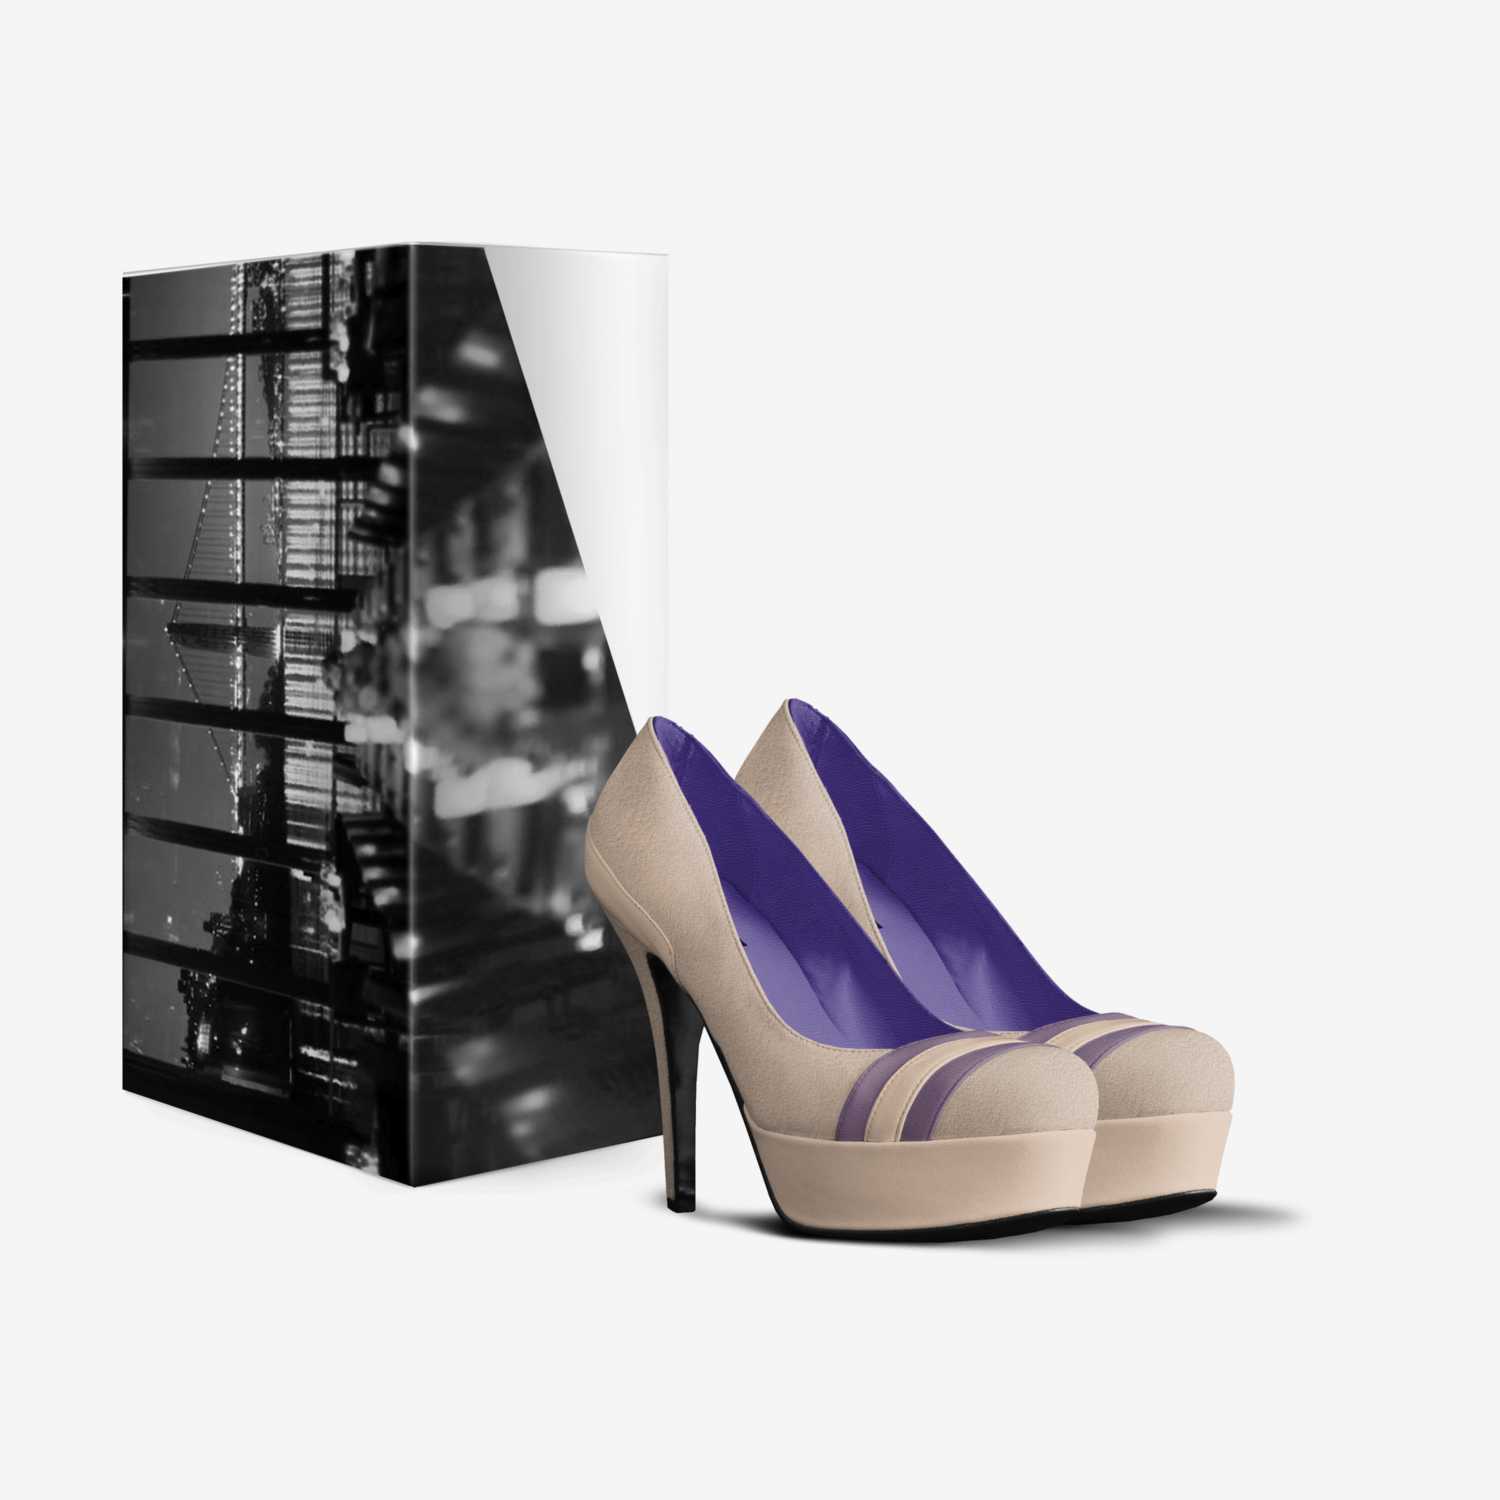 La Marina custom made in Italy shoes by R. Bembridge | Box view